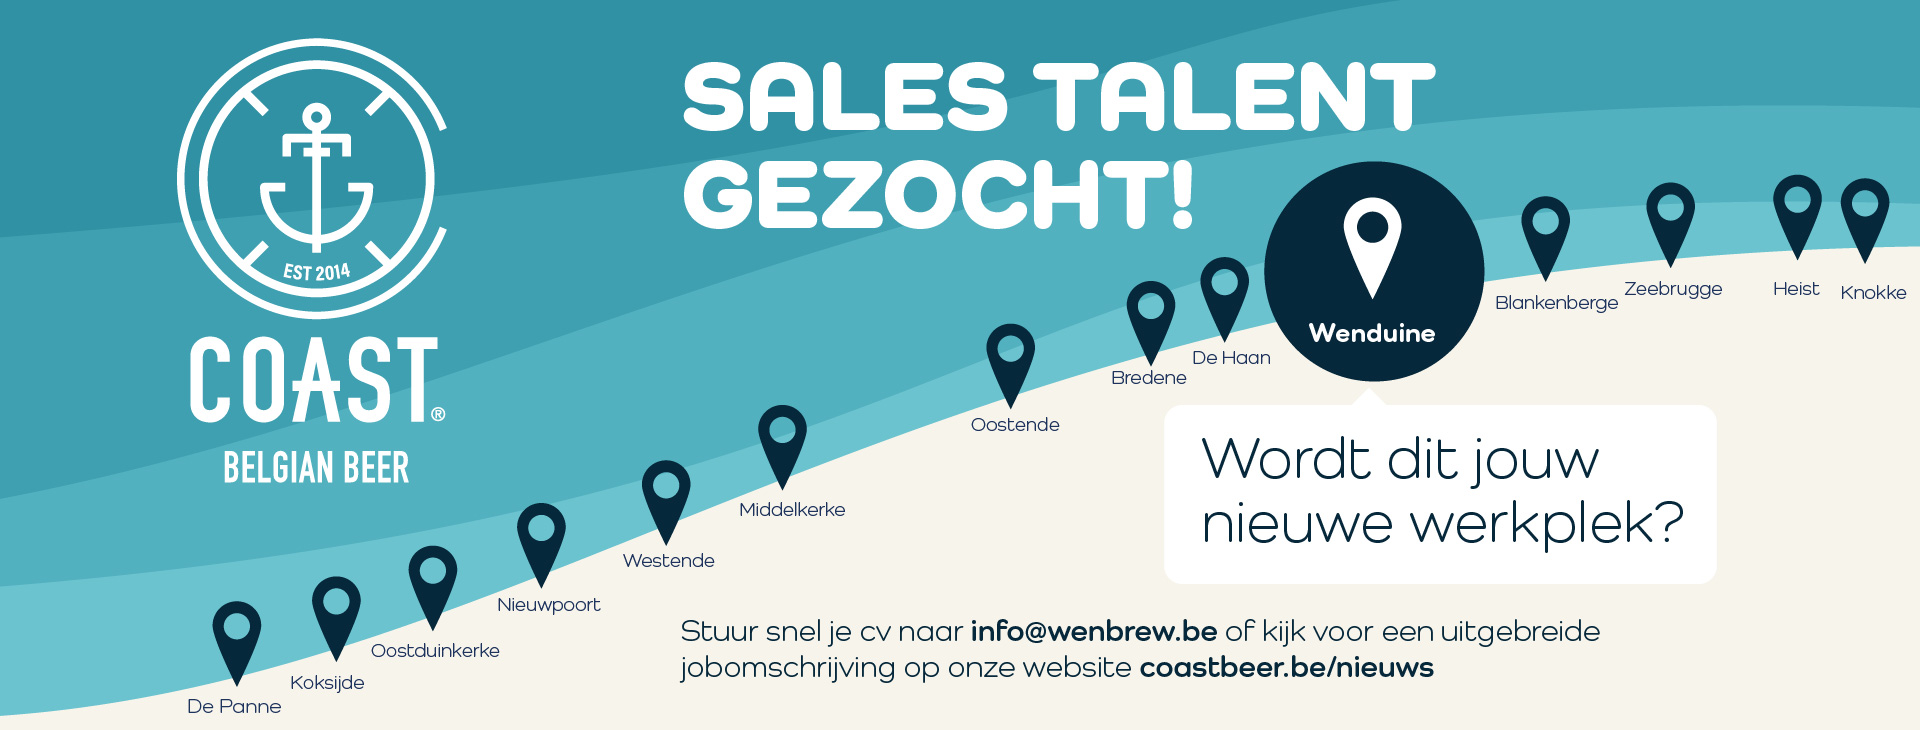 Featured image for “Sales Talent gezocht!”